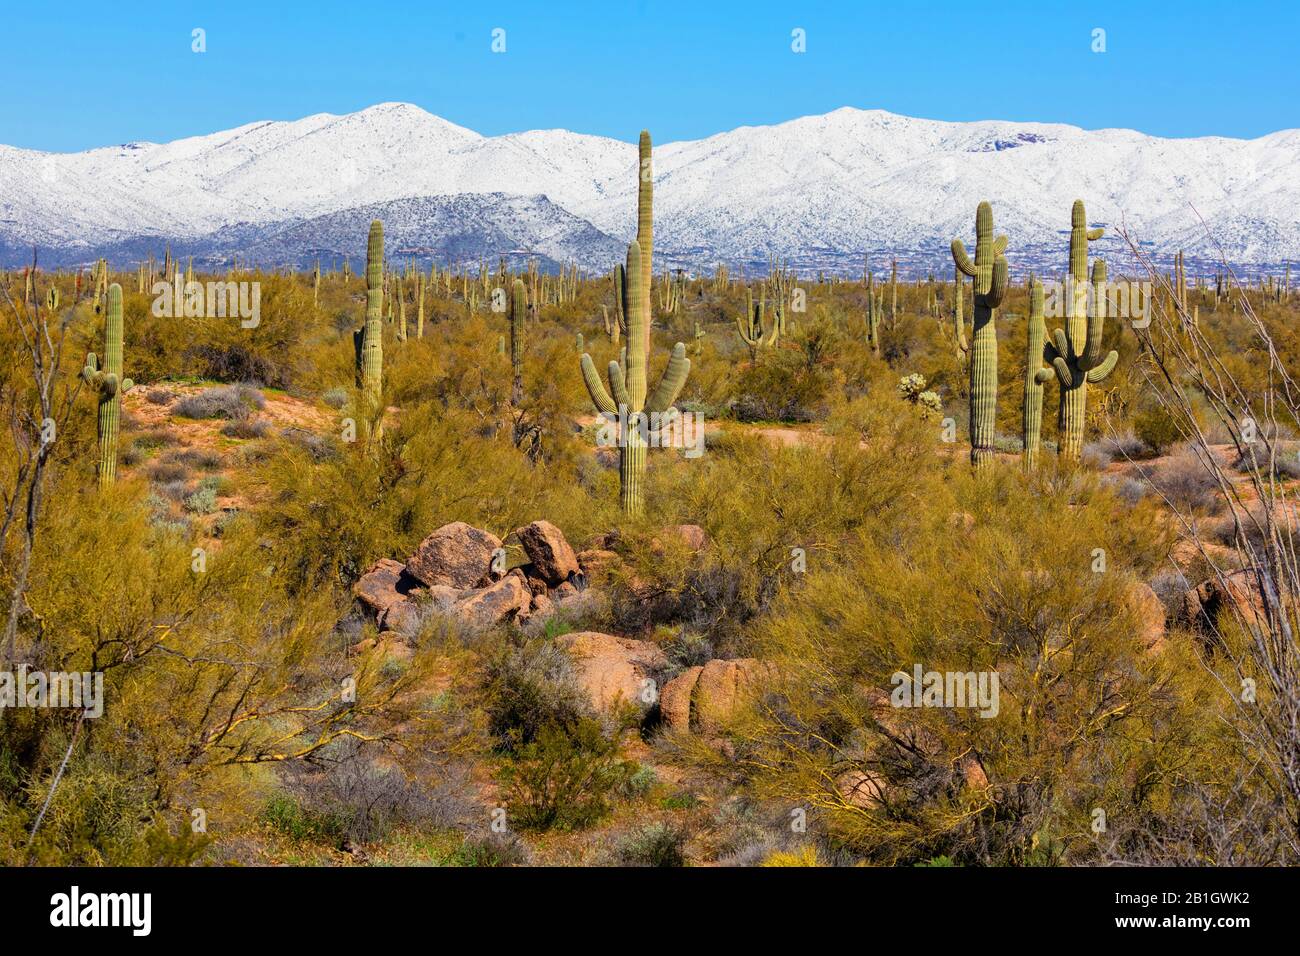 Saguaro cactus (Carnegiea gigantea, Cereus giganteus), molti saguaros di fronte alla catena montuosa innevata in primavera, USA, Arizona, Sonorawueste, Phoenix Foto Stock